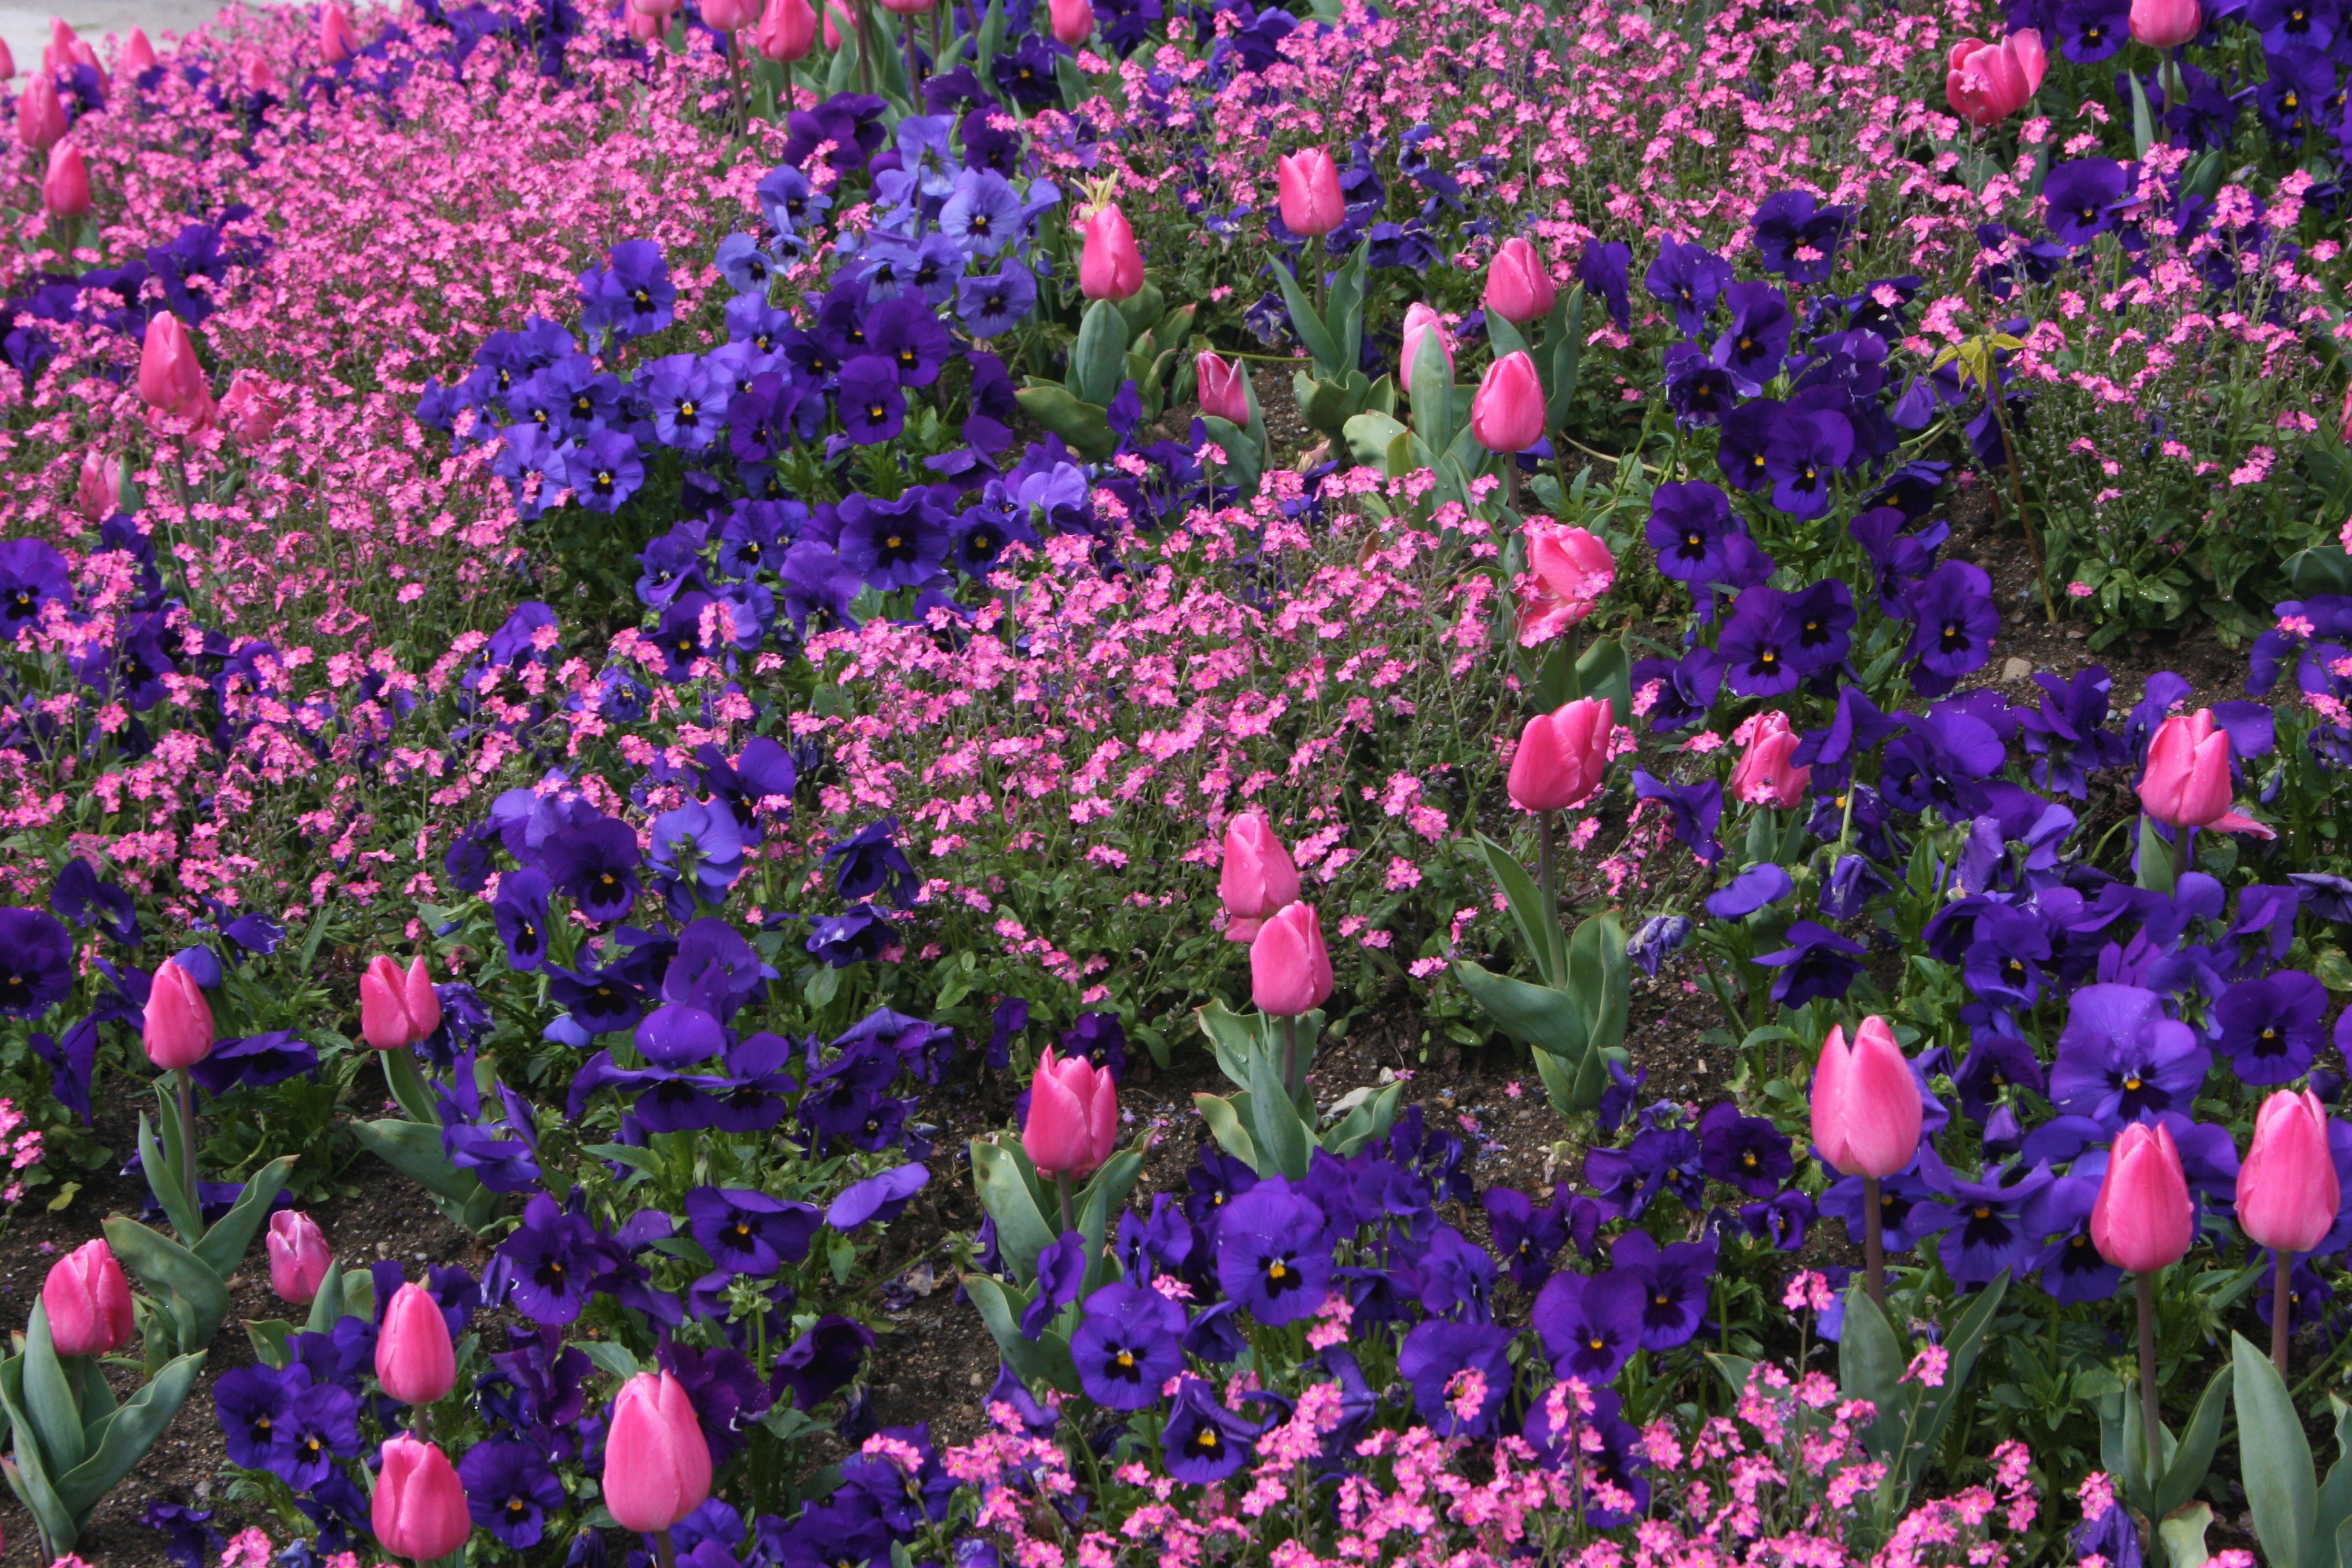 416016 descargar imagen tierra/naturaleza, flor, pensamiento, flor rosa, flor purpura, tulipán, flores: fondos de pantalla y protectores de pantalla gratis